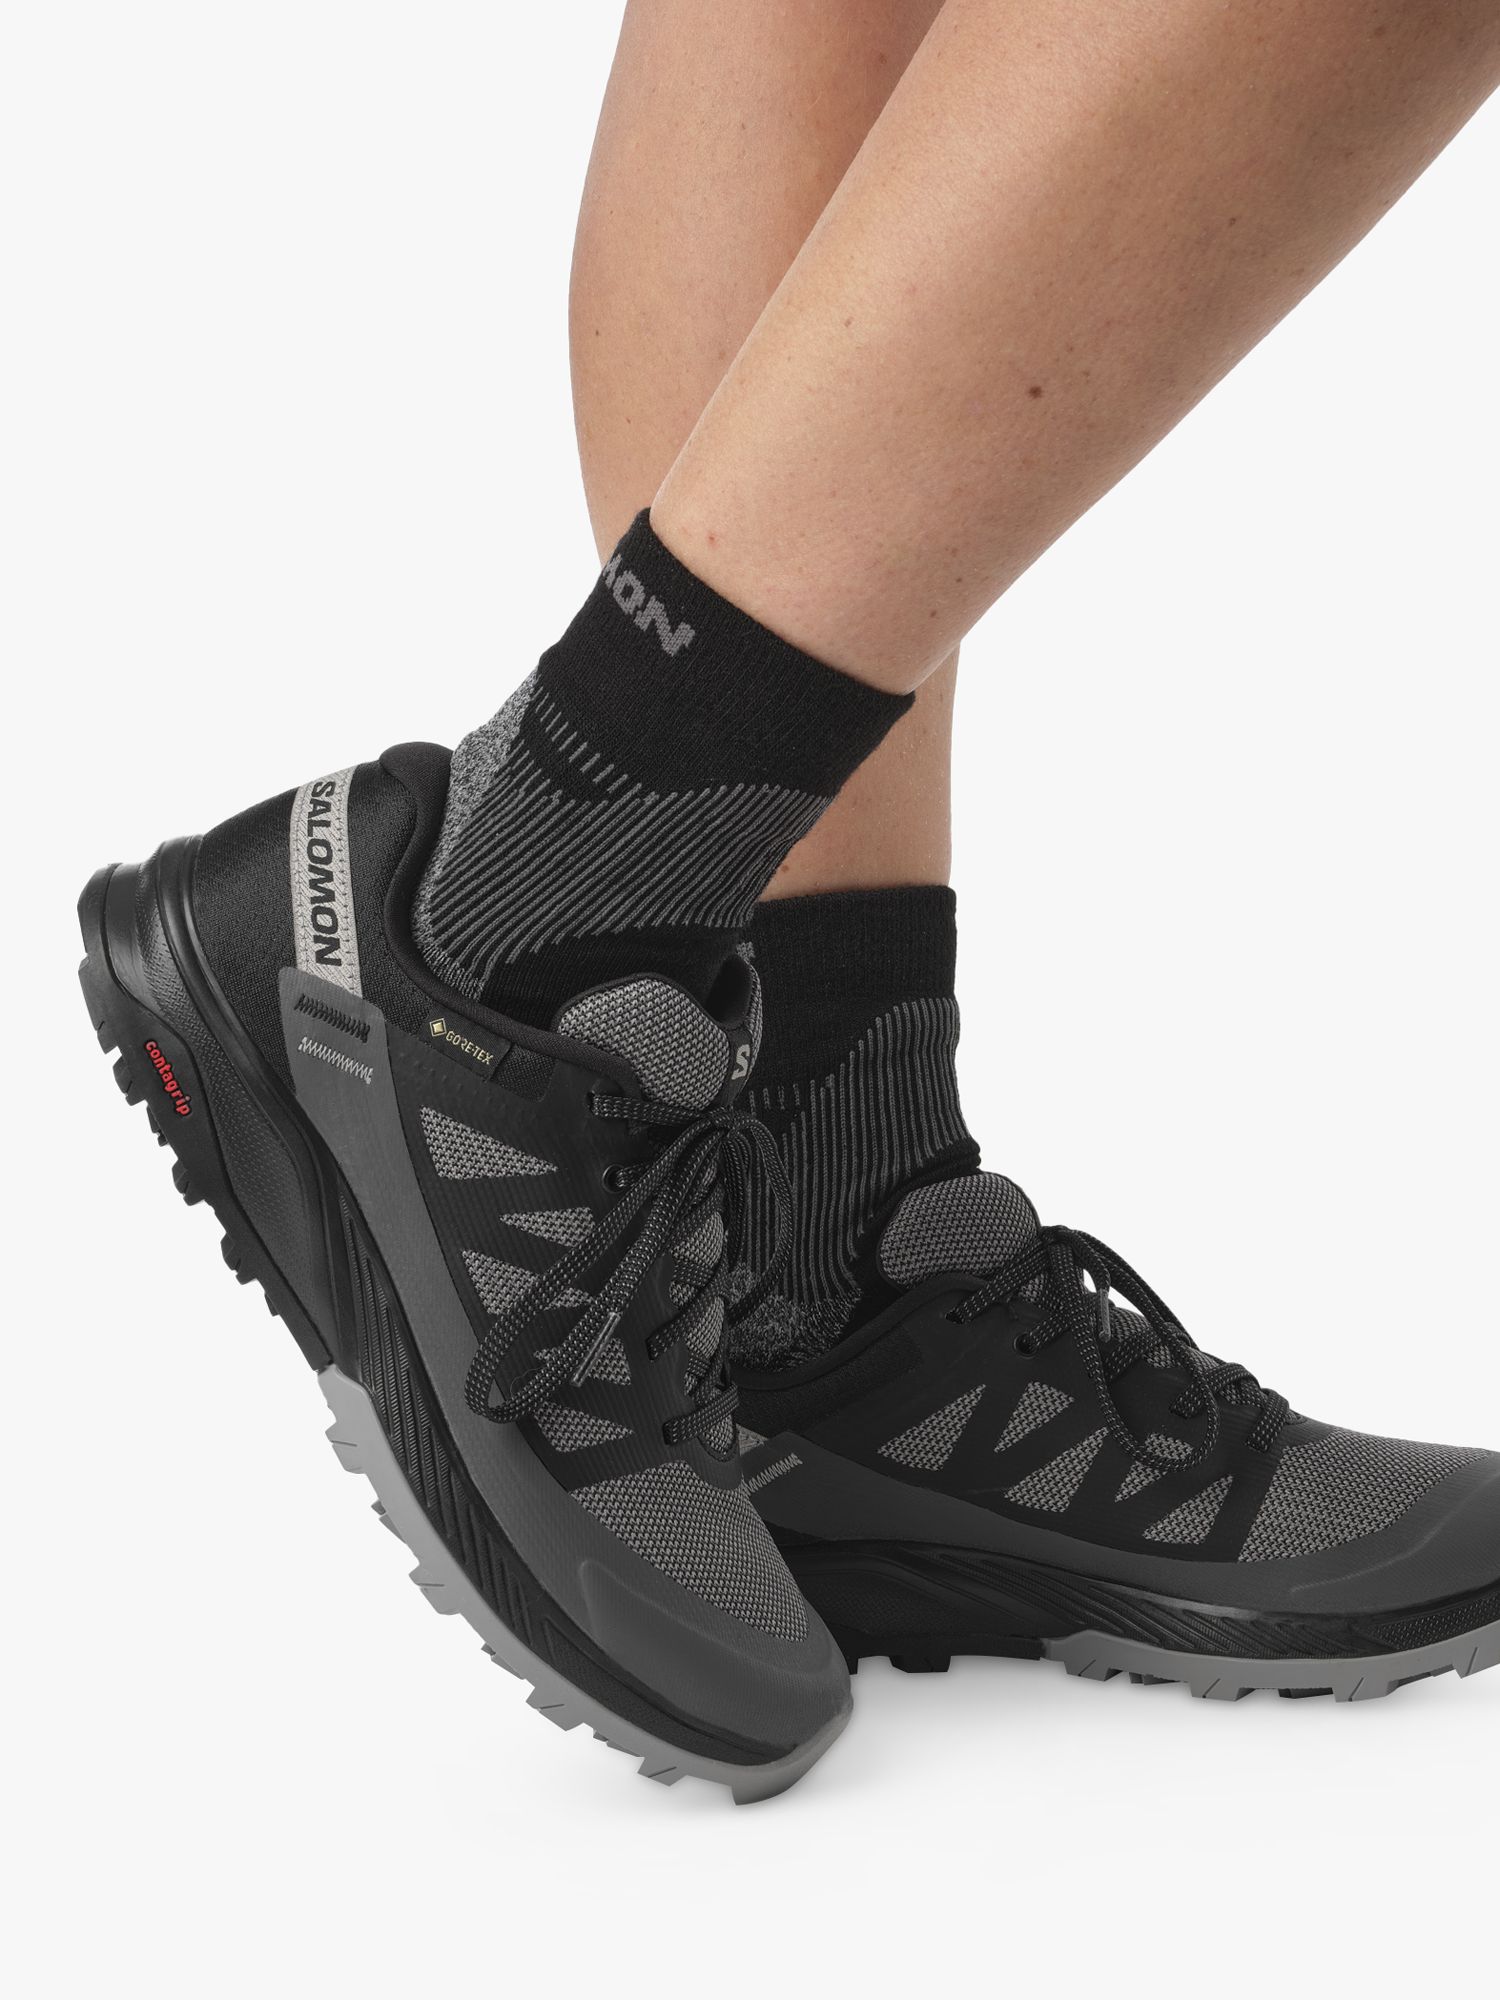 Salomon Outrise Women's Waterproof Hiking Shoes, Black/Magnet at John Lewis & Partners